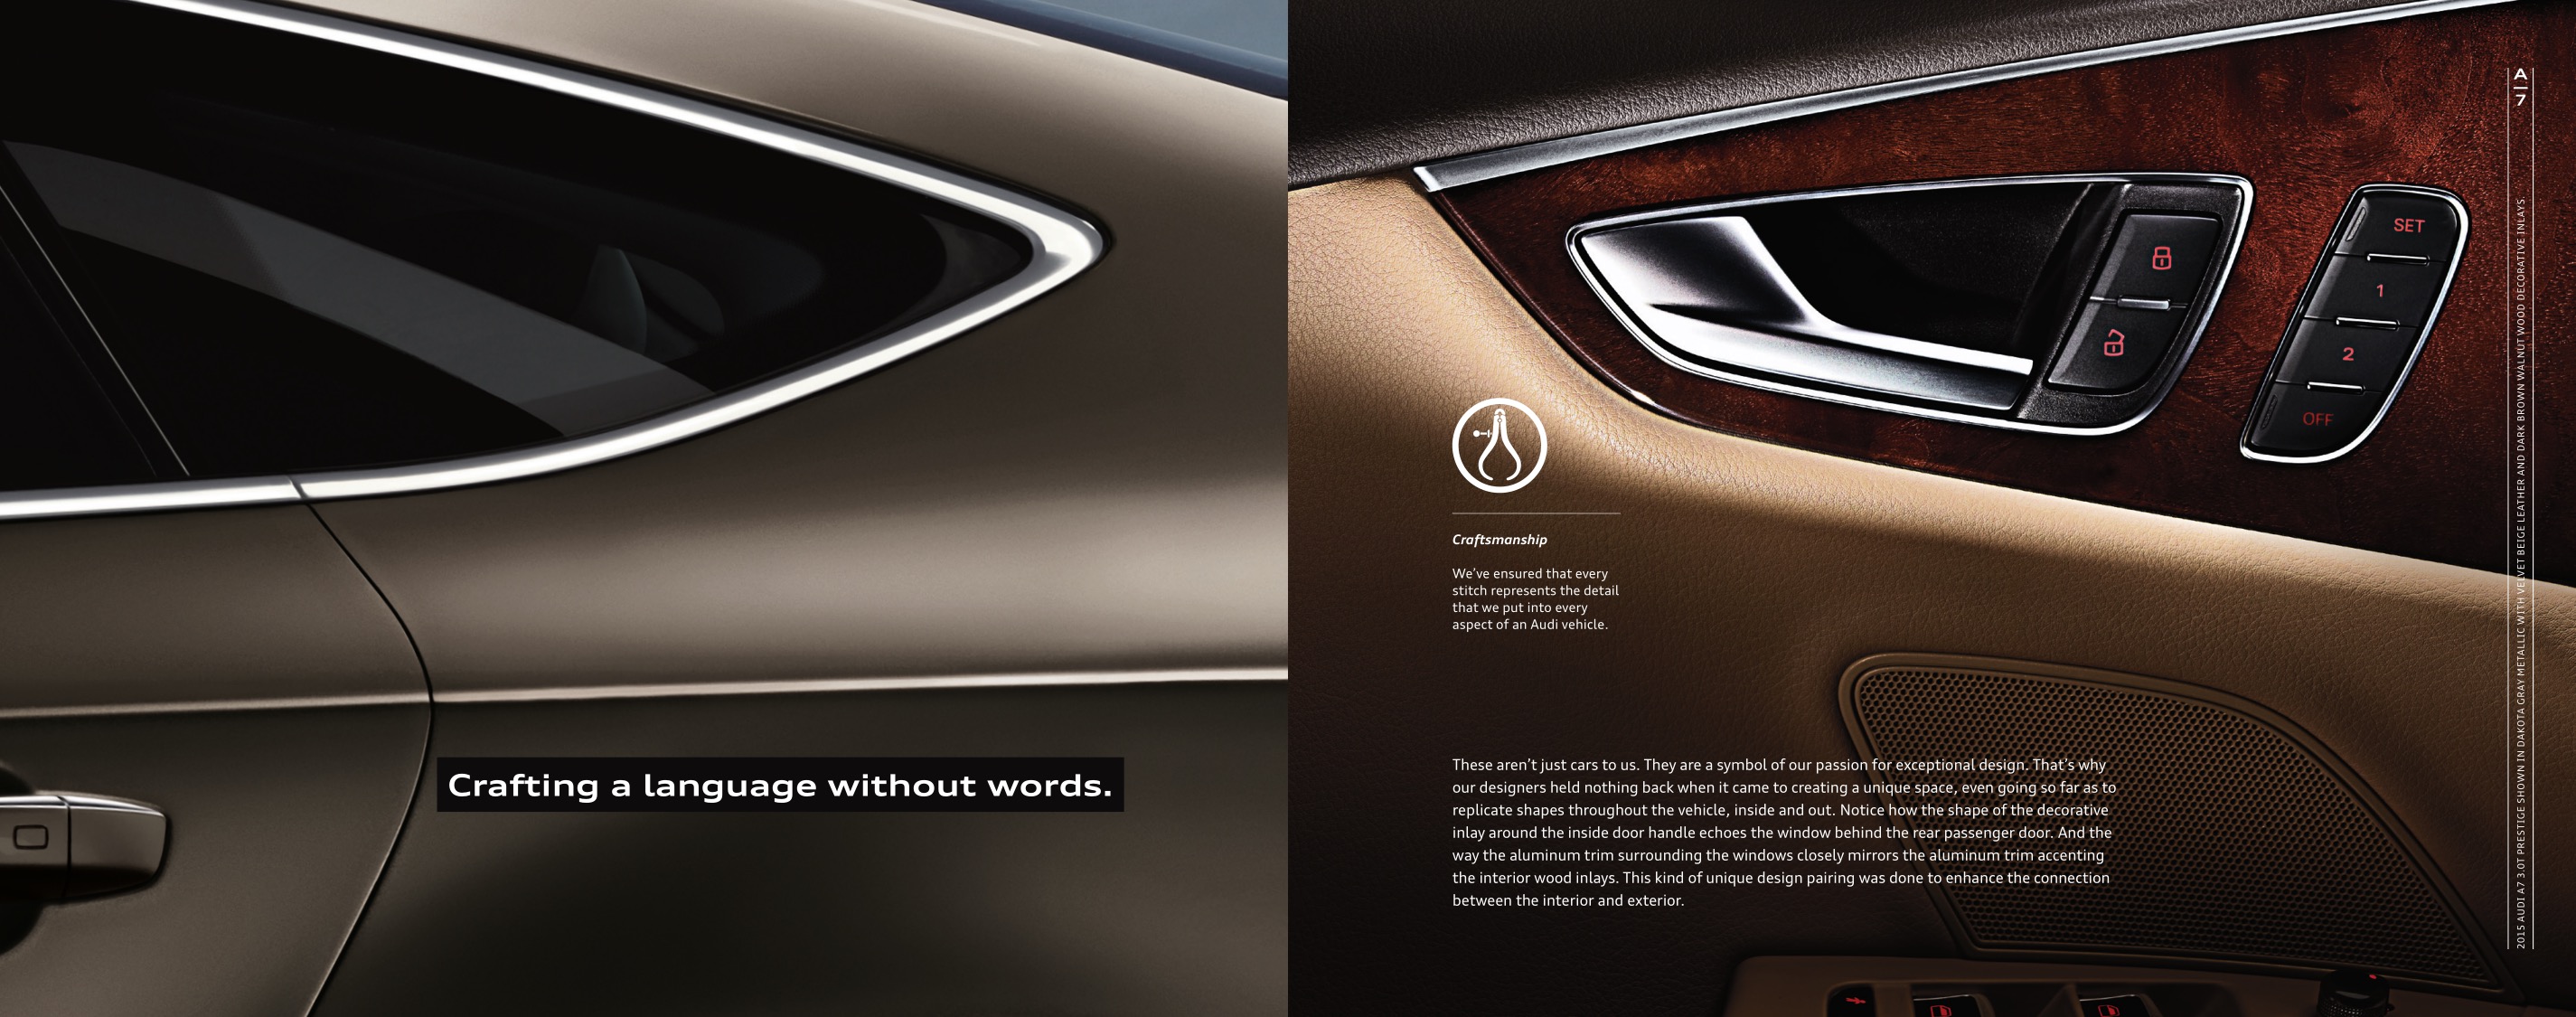 2015 Audi A7 Brochure Page 6